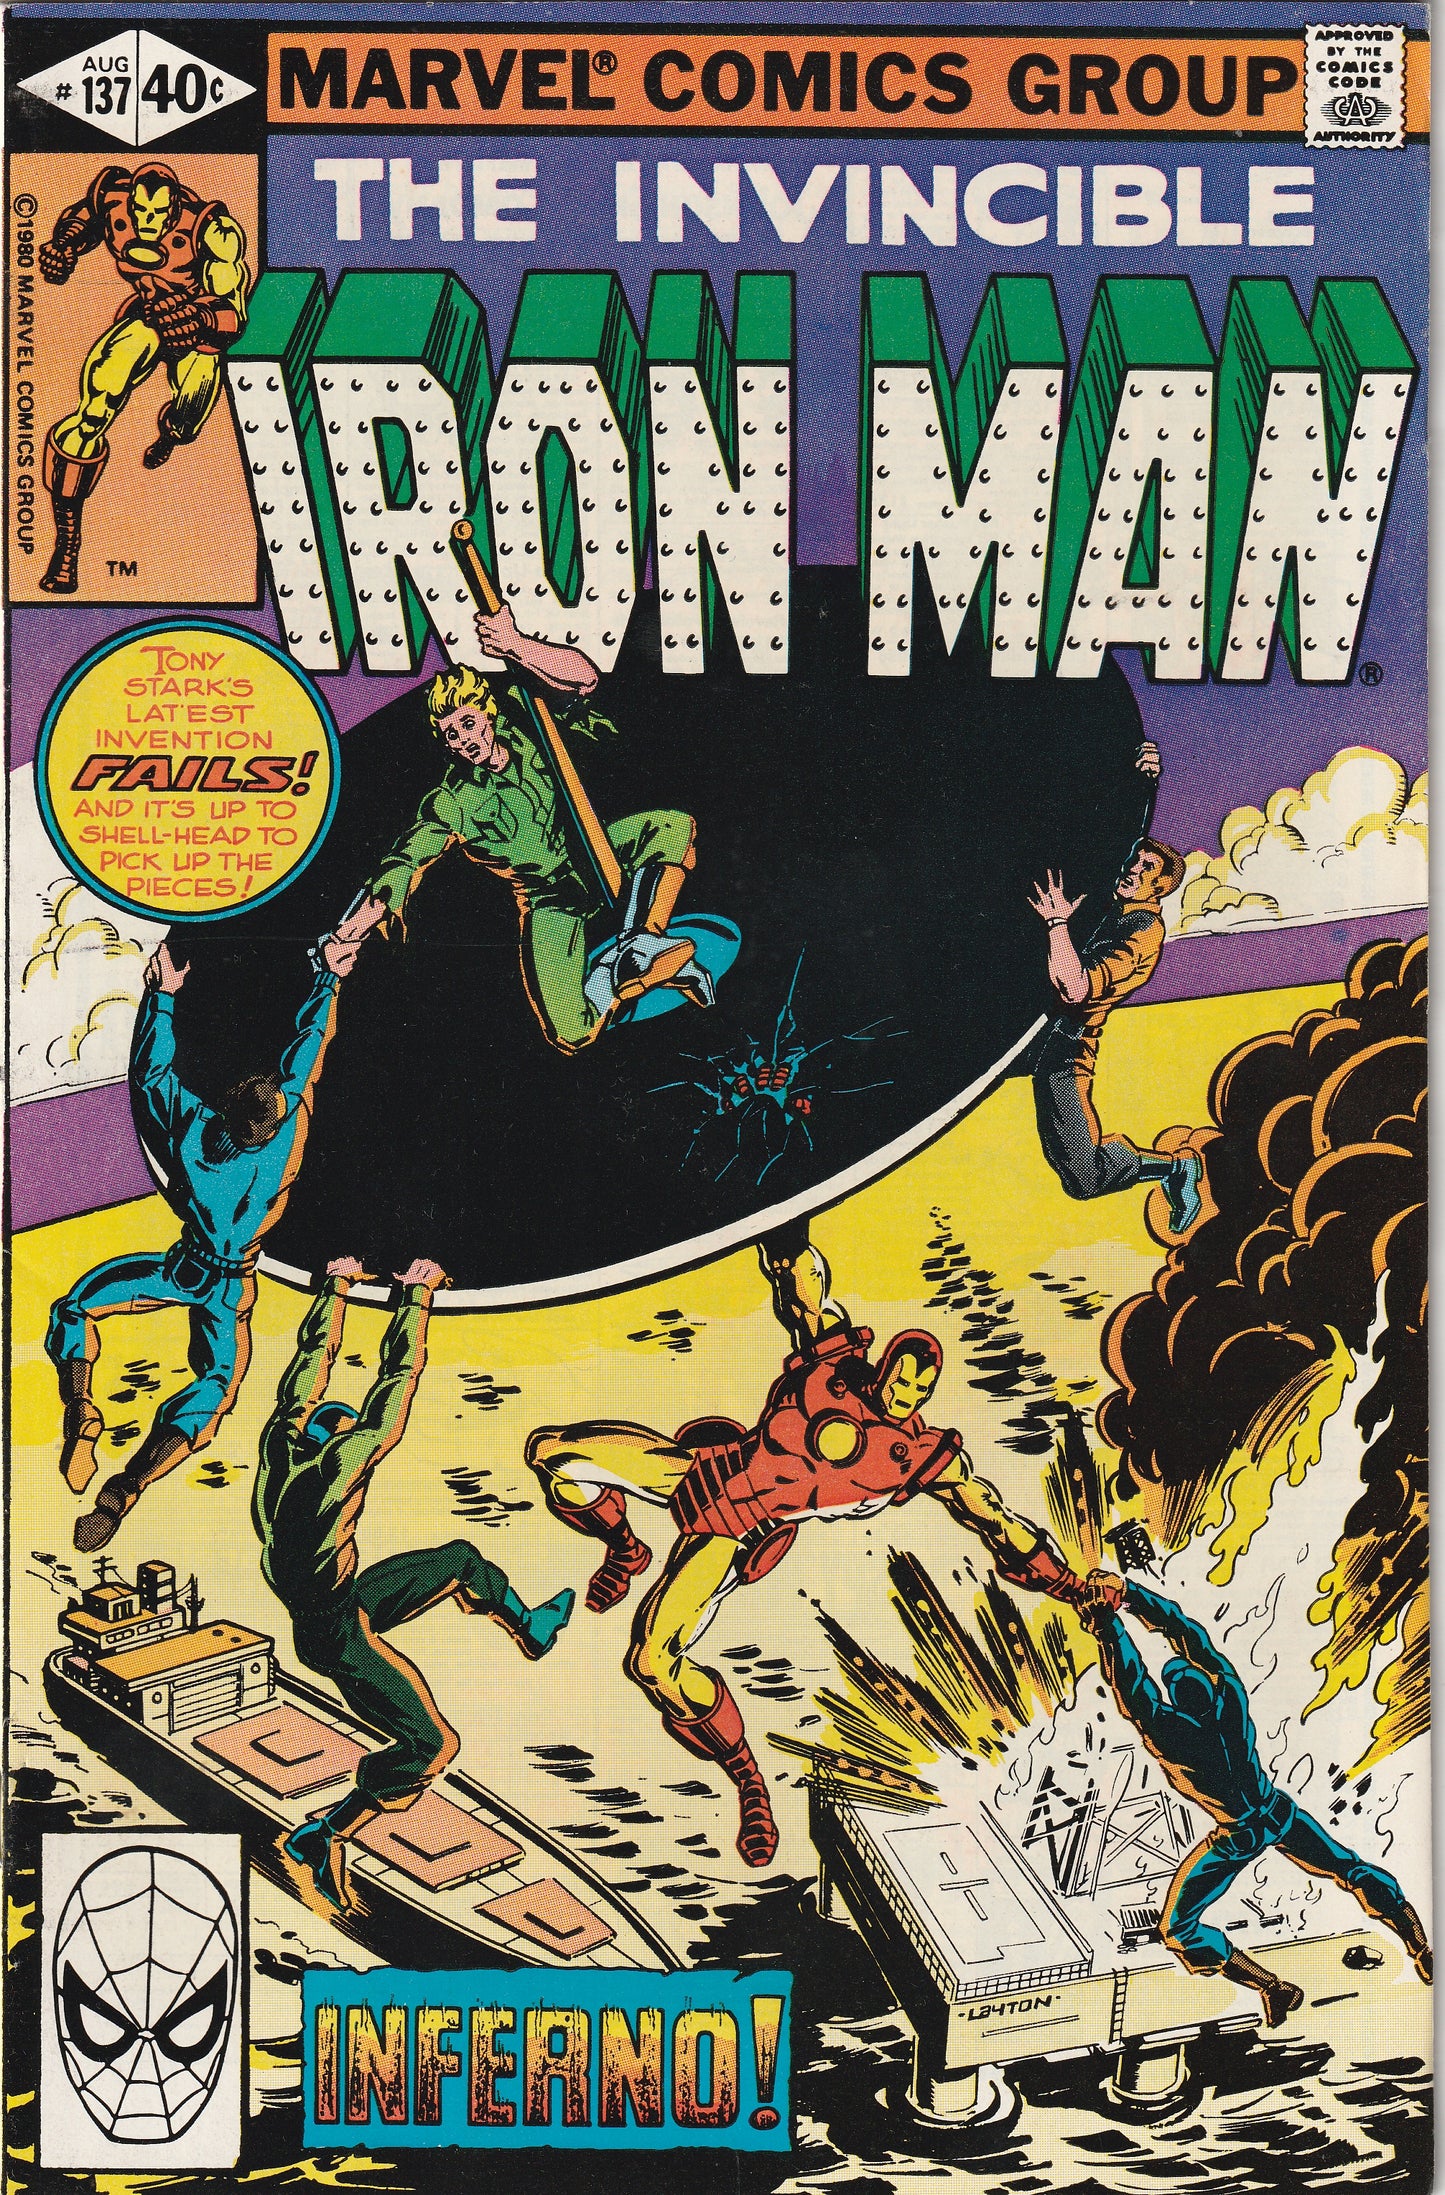 Iron Man #137 (1980)